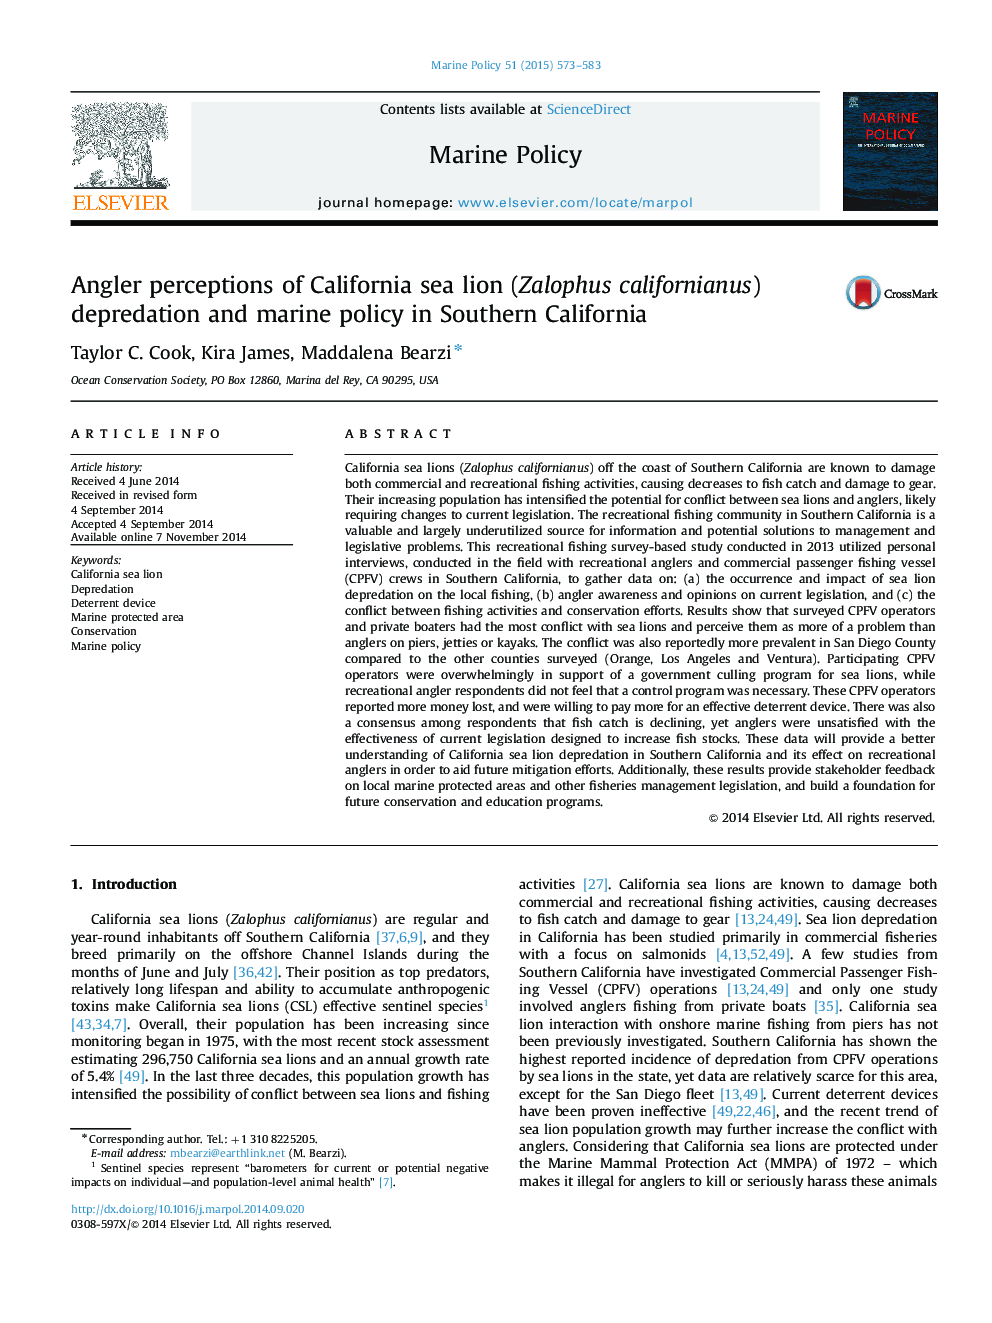 Angler perceptions of California sea lion (Zalophus californianus) depredation and marine policy in Southern California